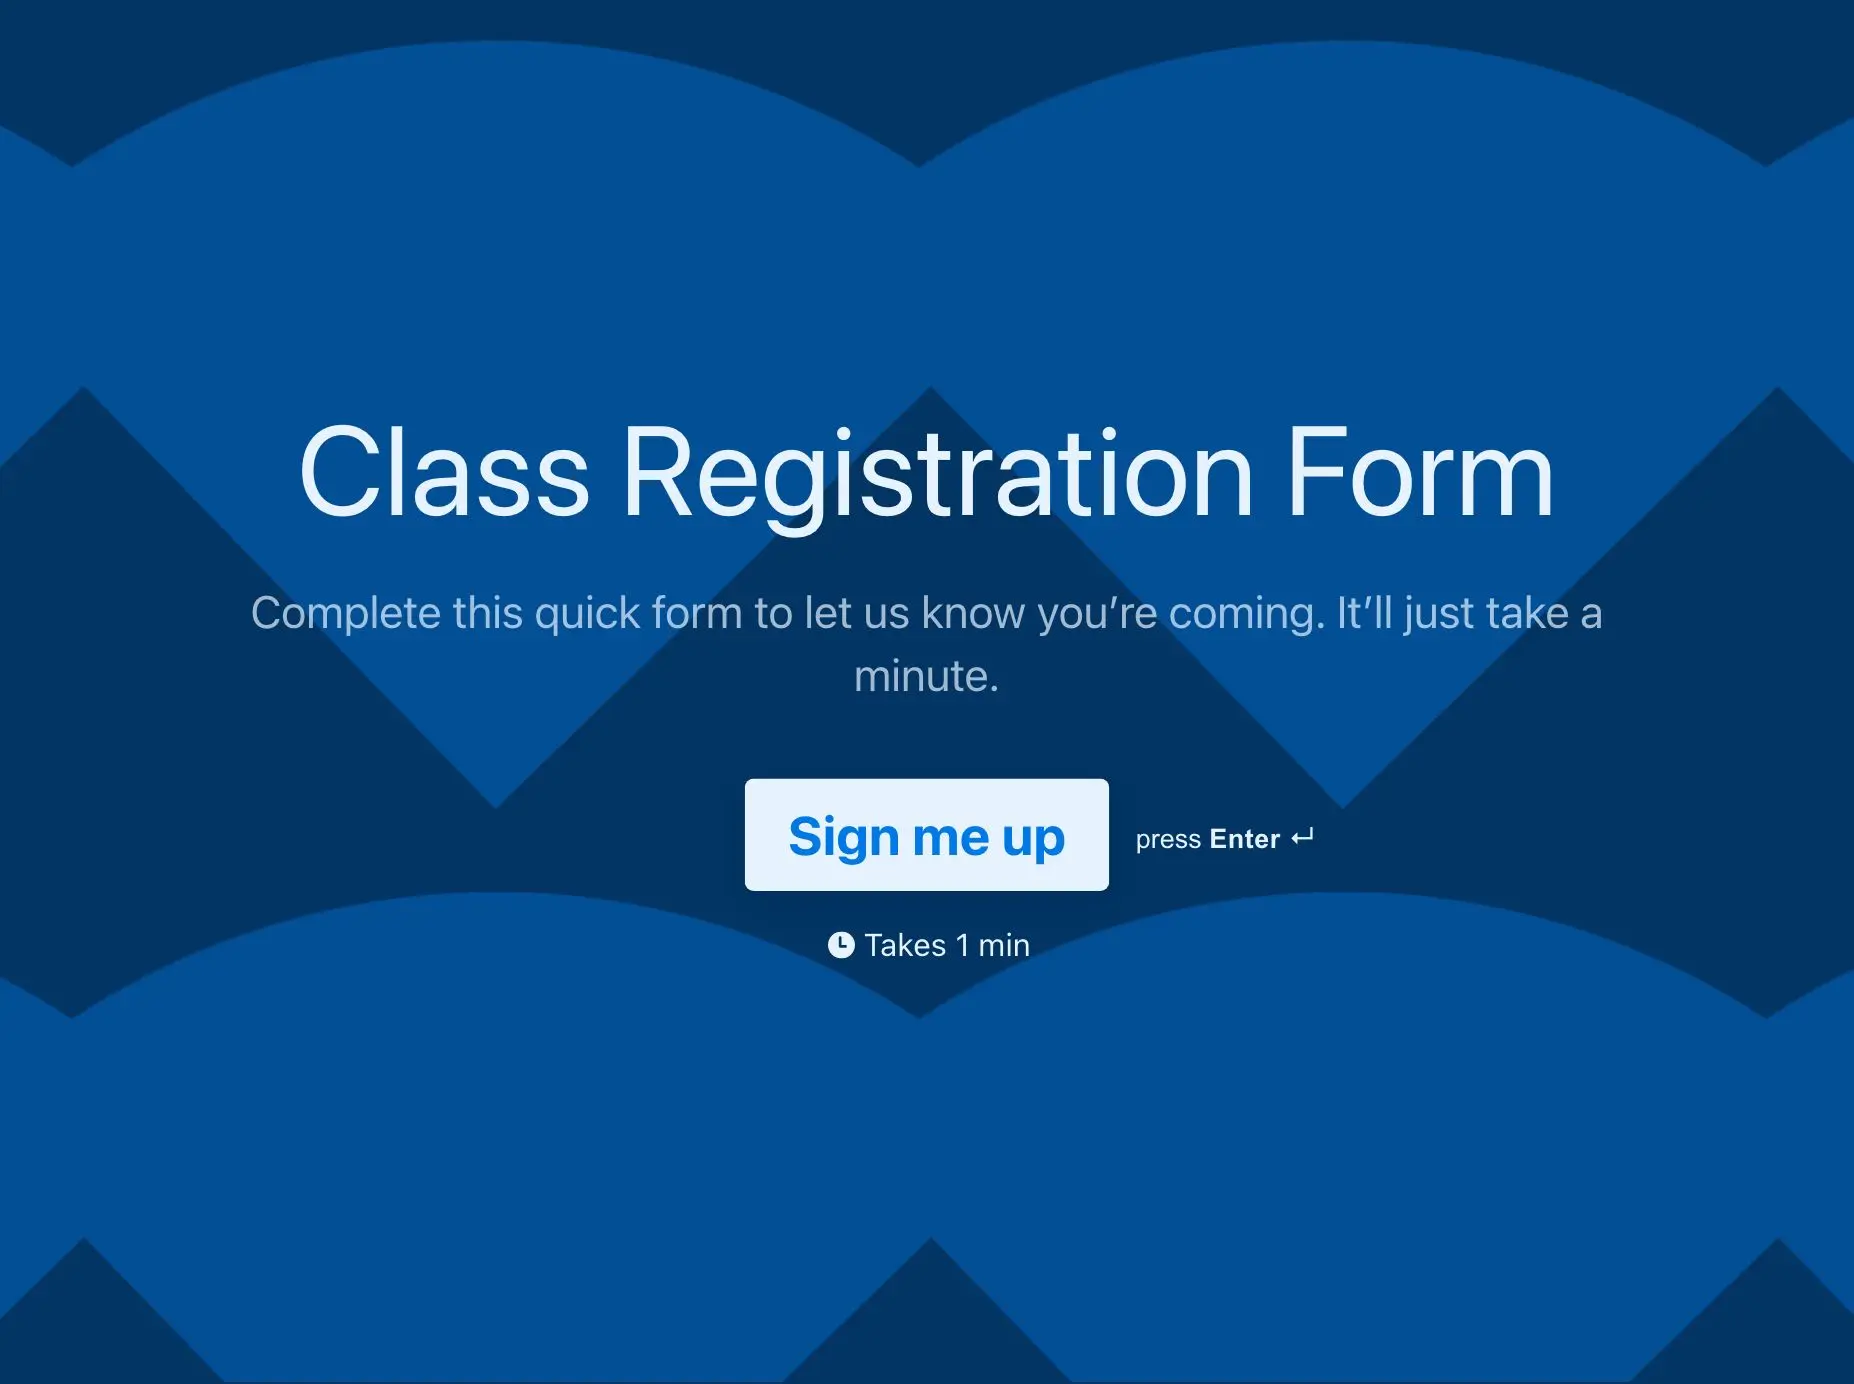 Class Registration Form Template Hero